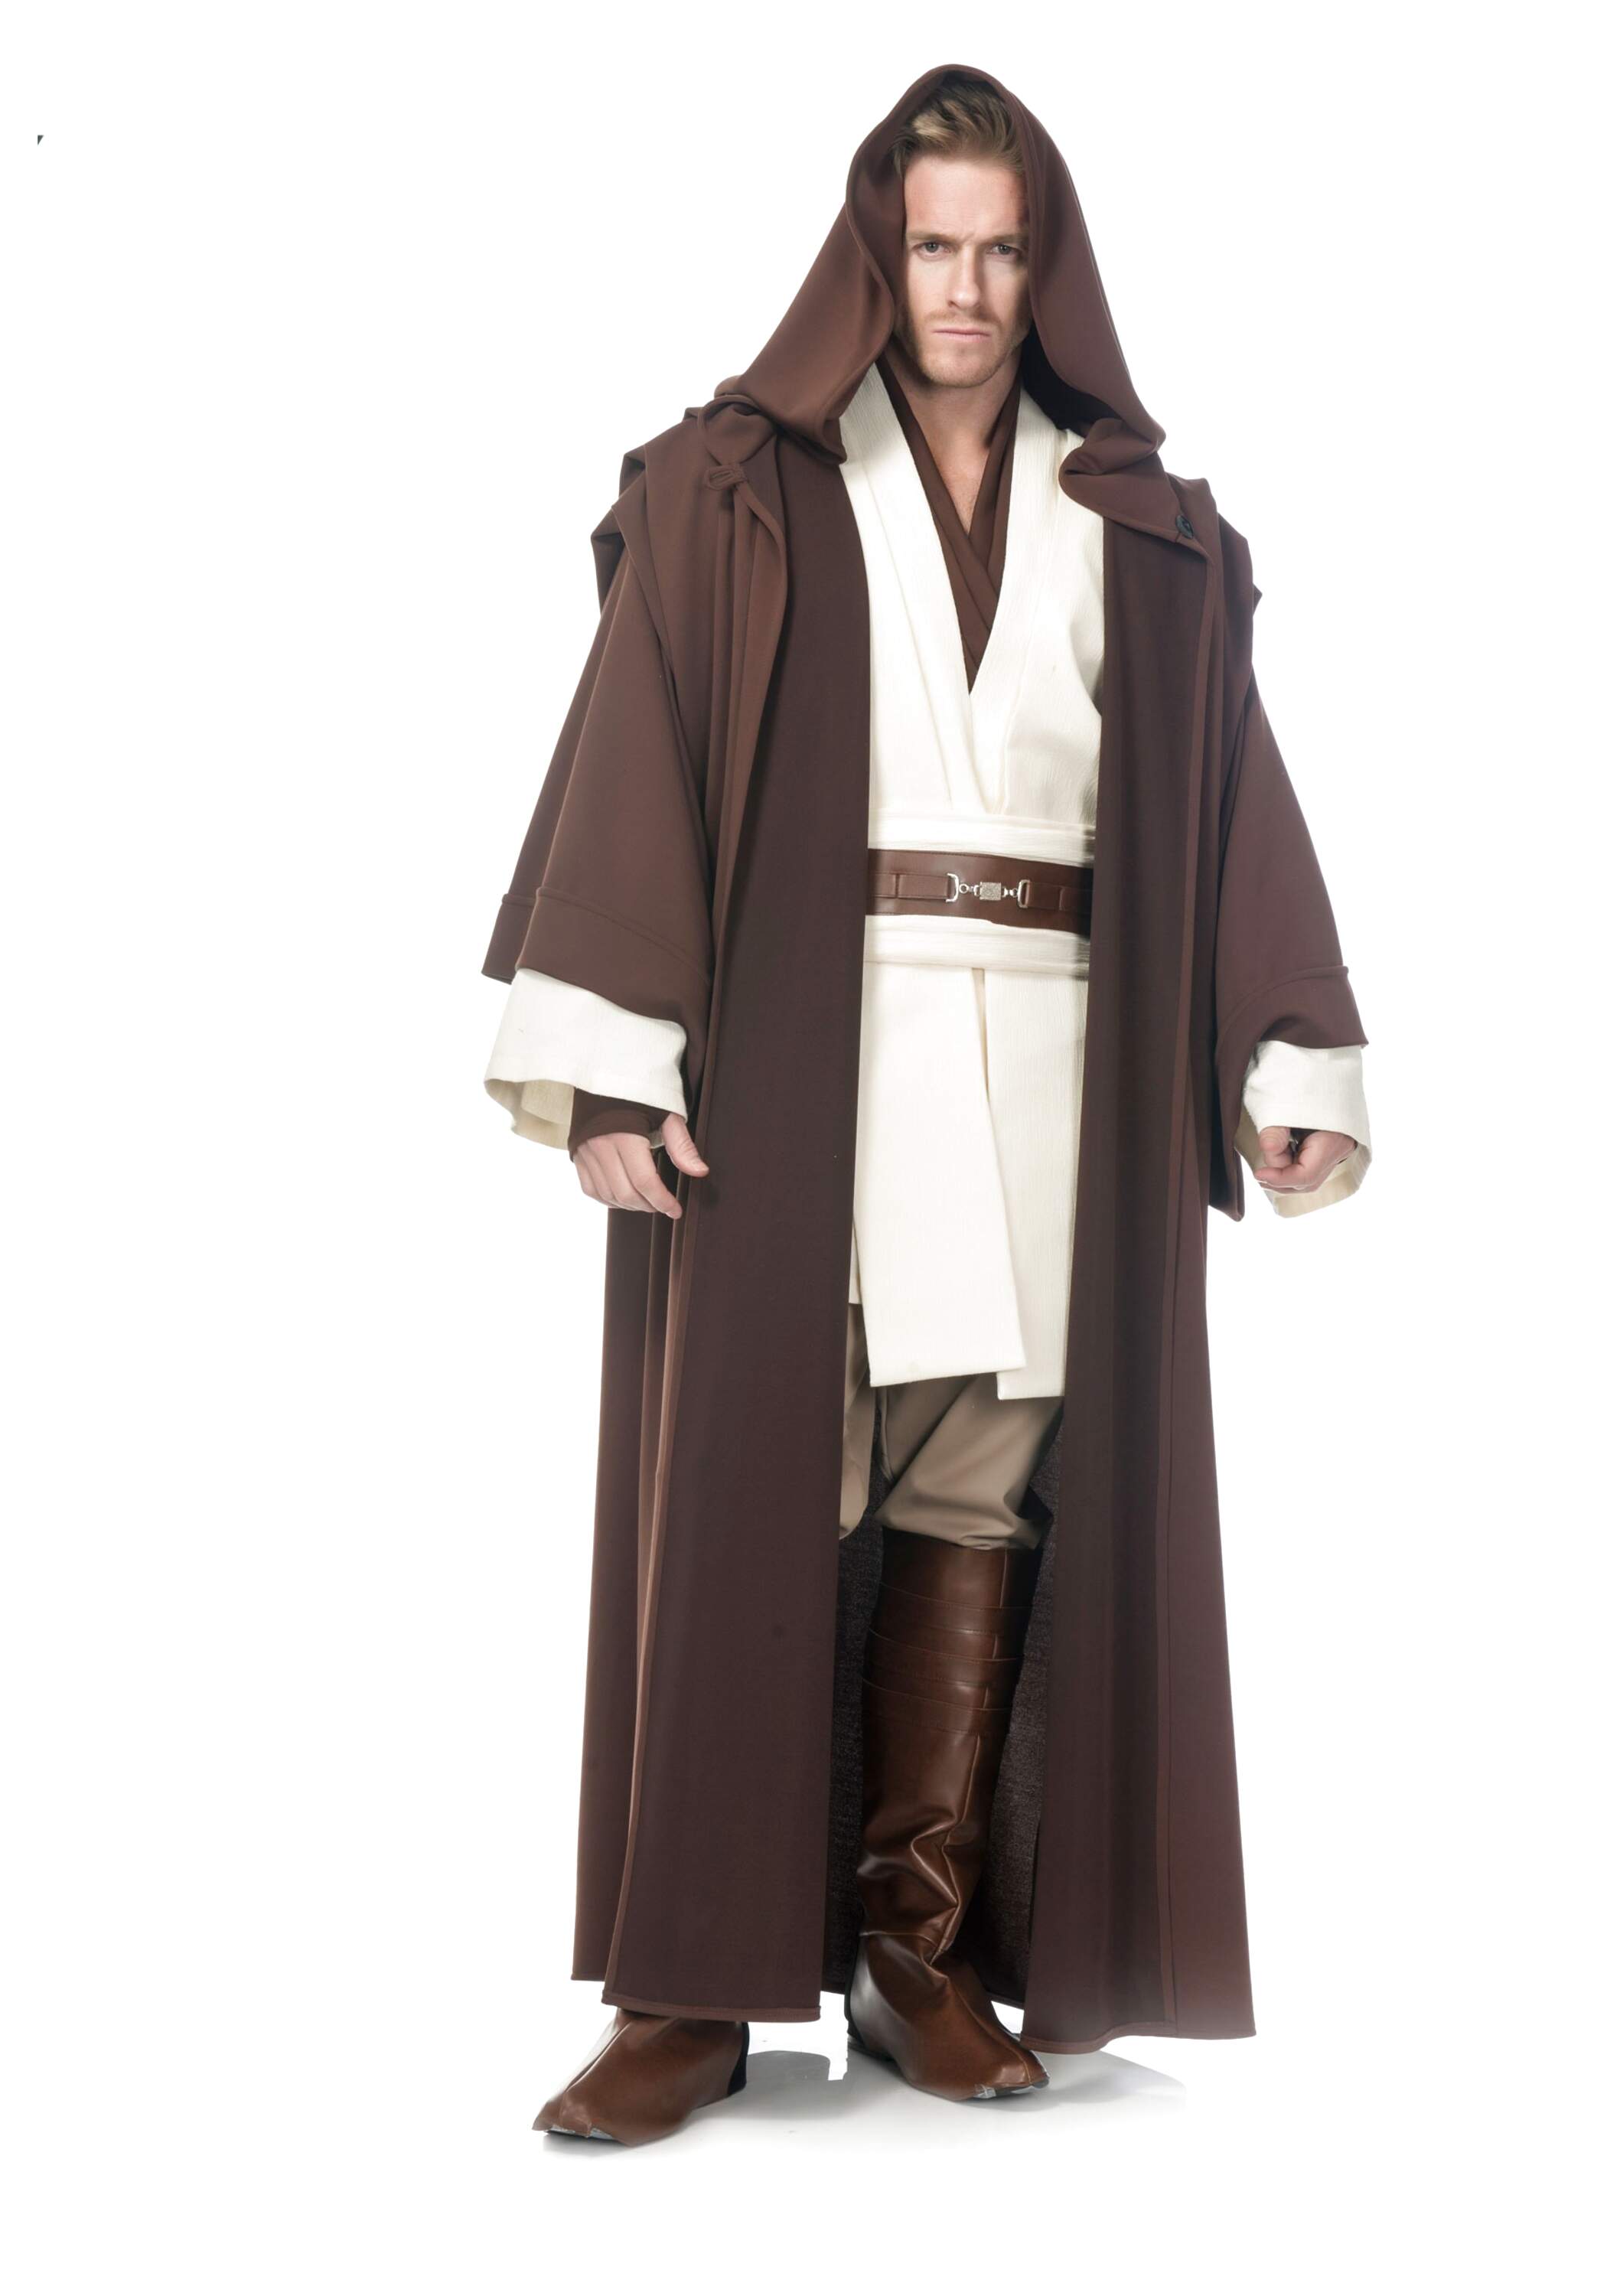 Obi Wan Kenobi Costume for sale in UK | 57 used Obi Wan Kenobi Costumes